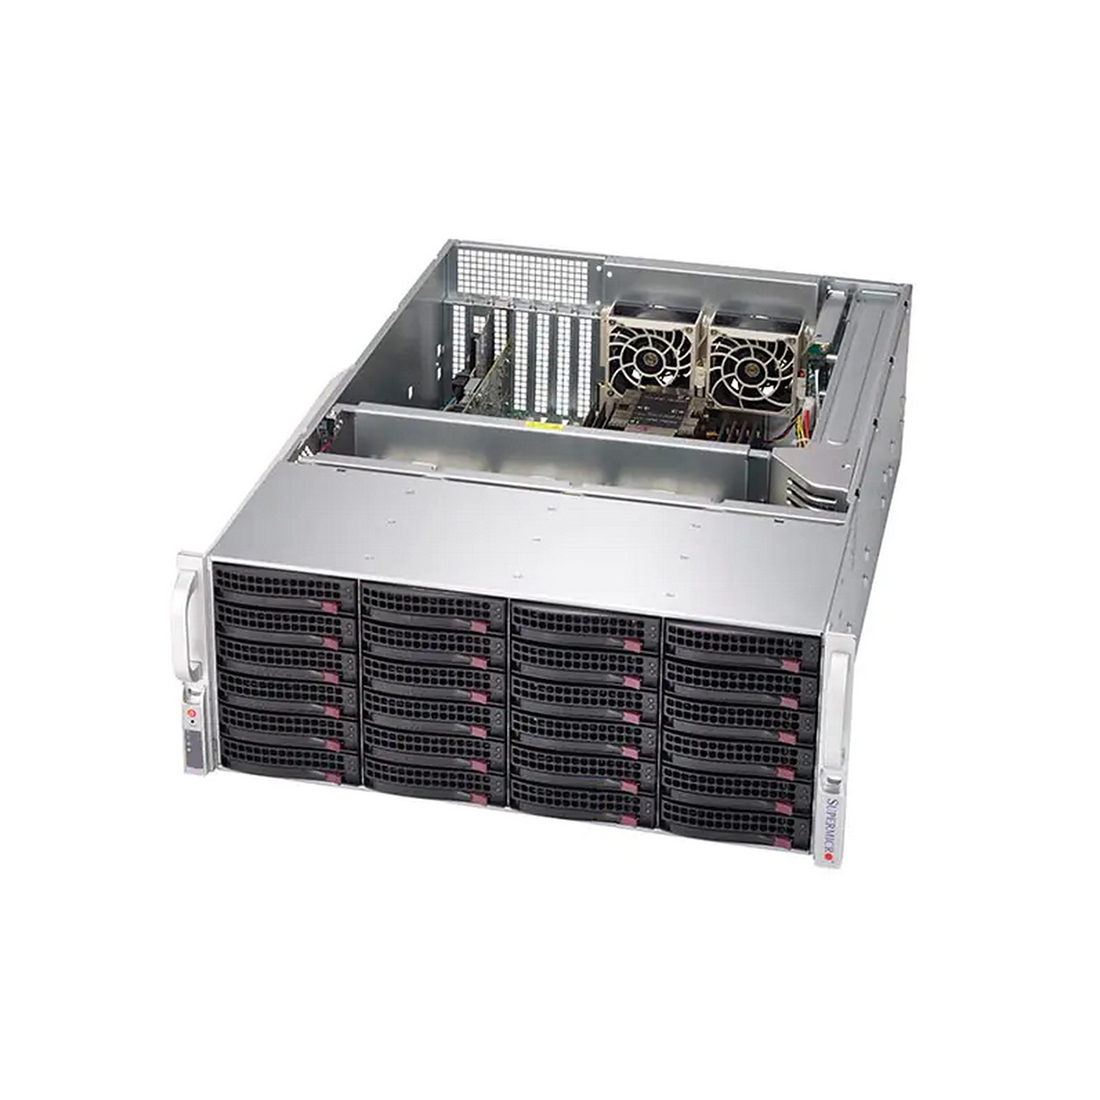 Серверная платформа, SUPERMICRO, SSG-6049P-E1CR24H, 4U, 2x3647, 16xDDR4, 24x3.5" SAS expander, 1200W